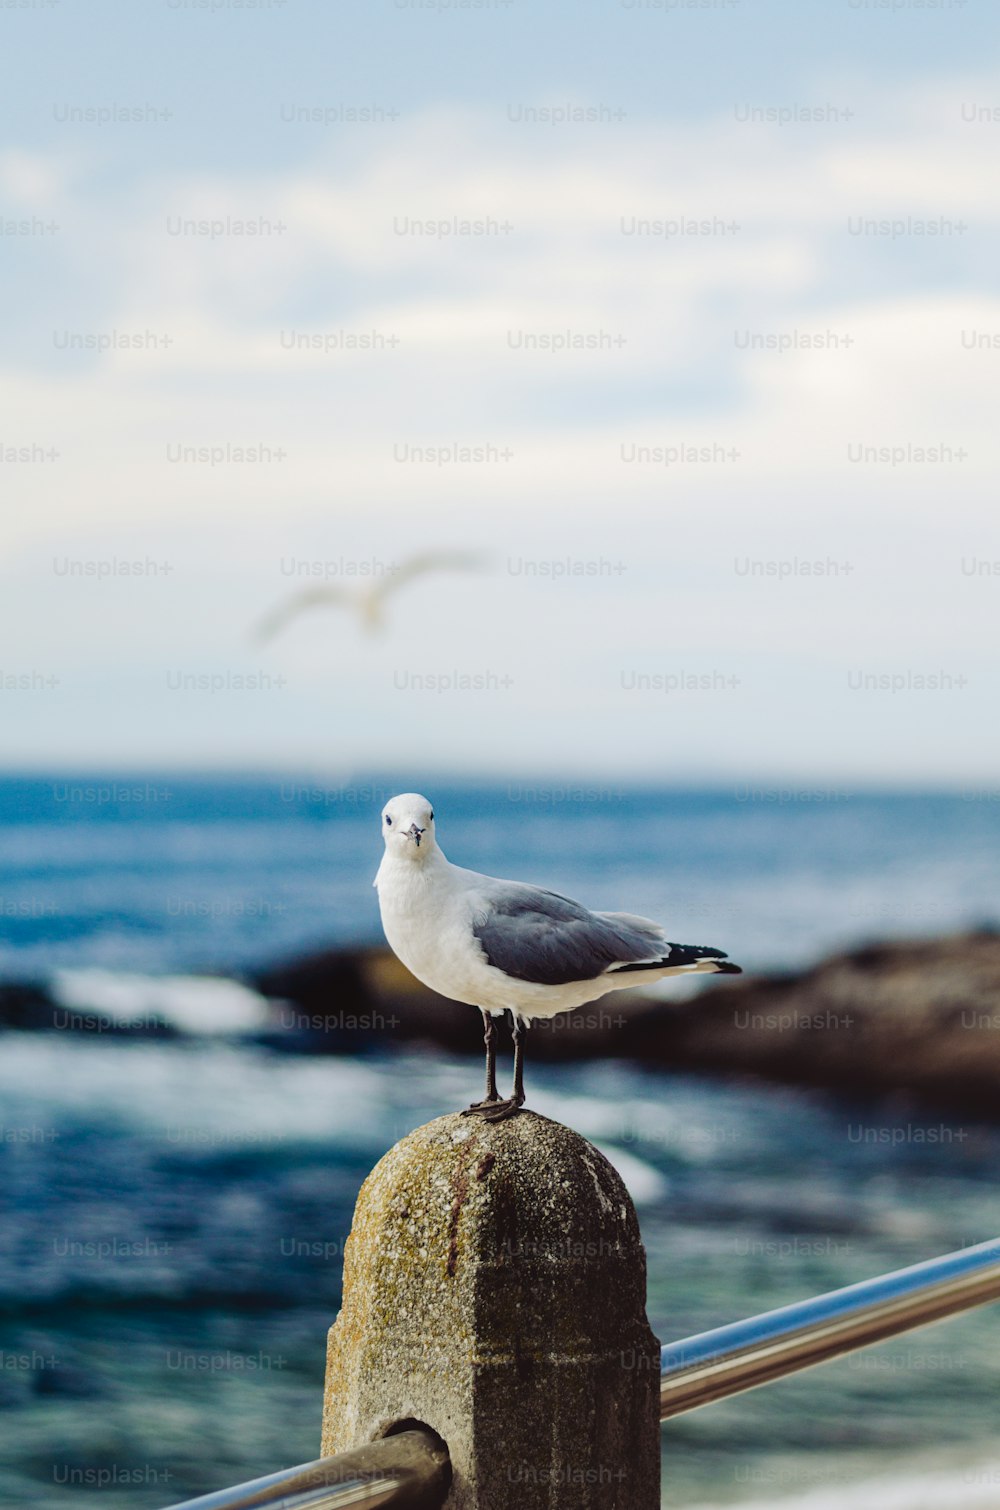 a seagull standing on a railing near the ocean